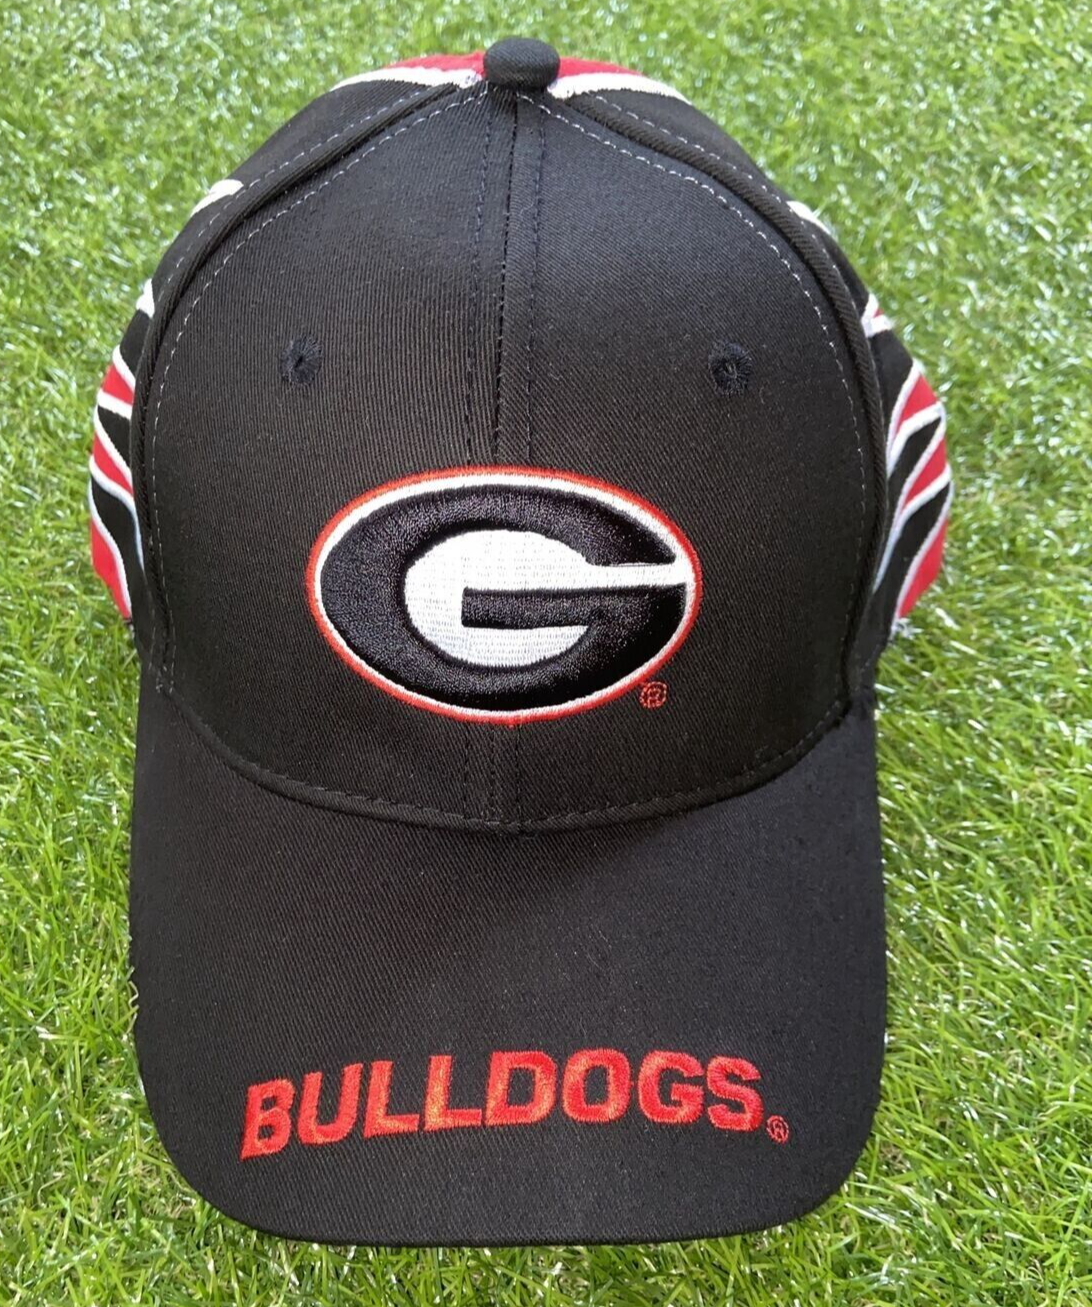 Georgia Bulldogs Black & Red Vintage Capsmith, Inc. Strapback Adjustable Cap/Hat